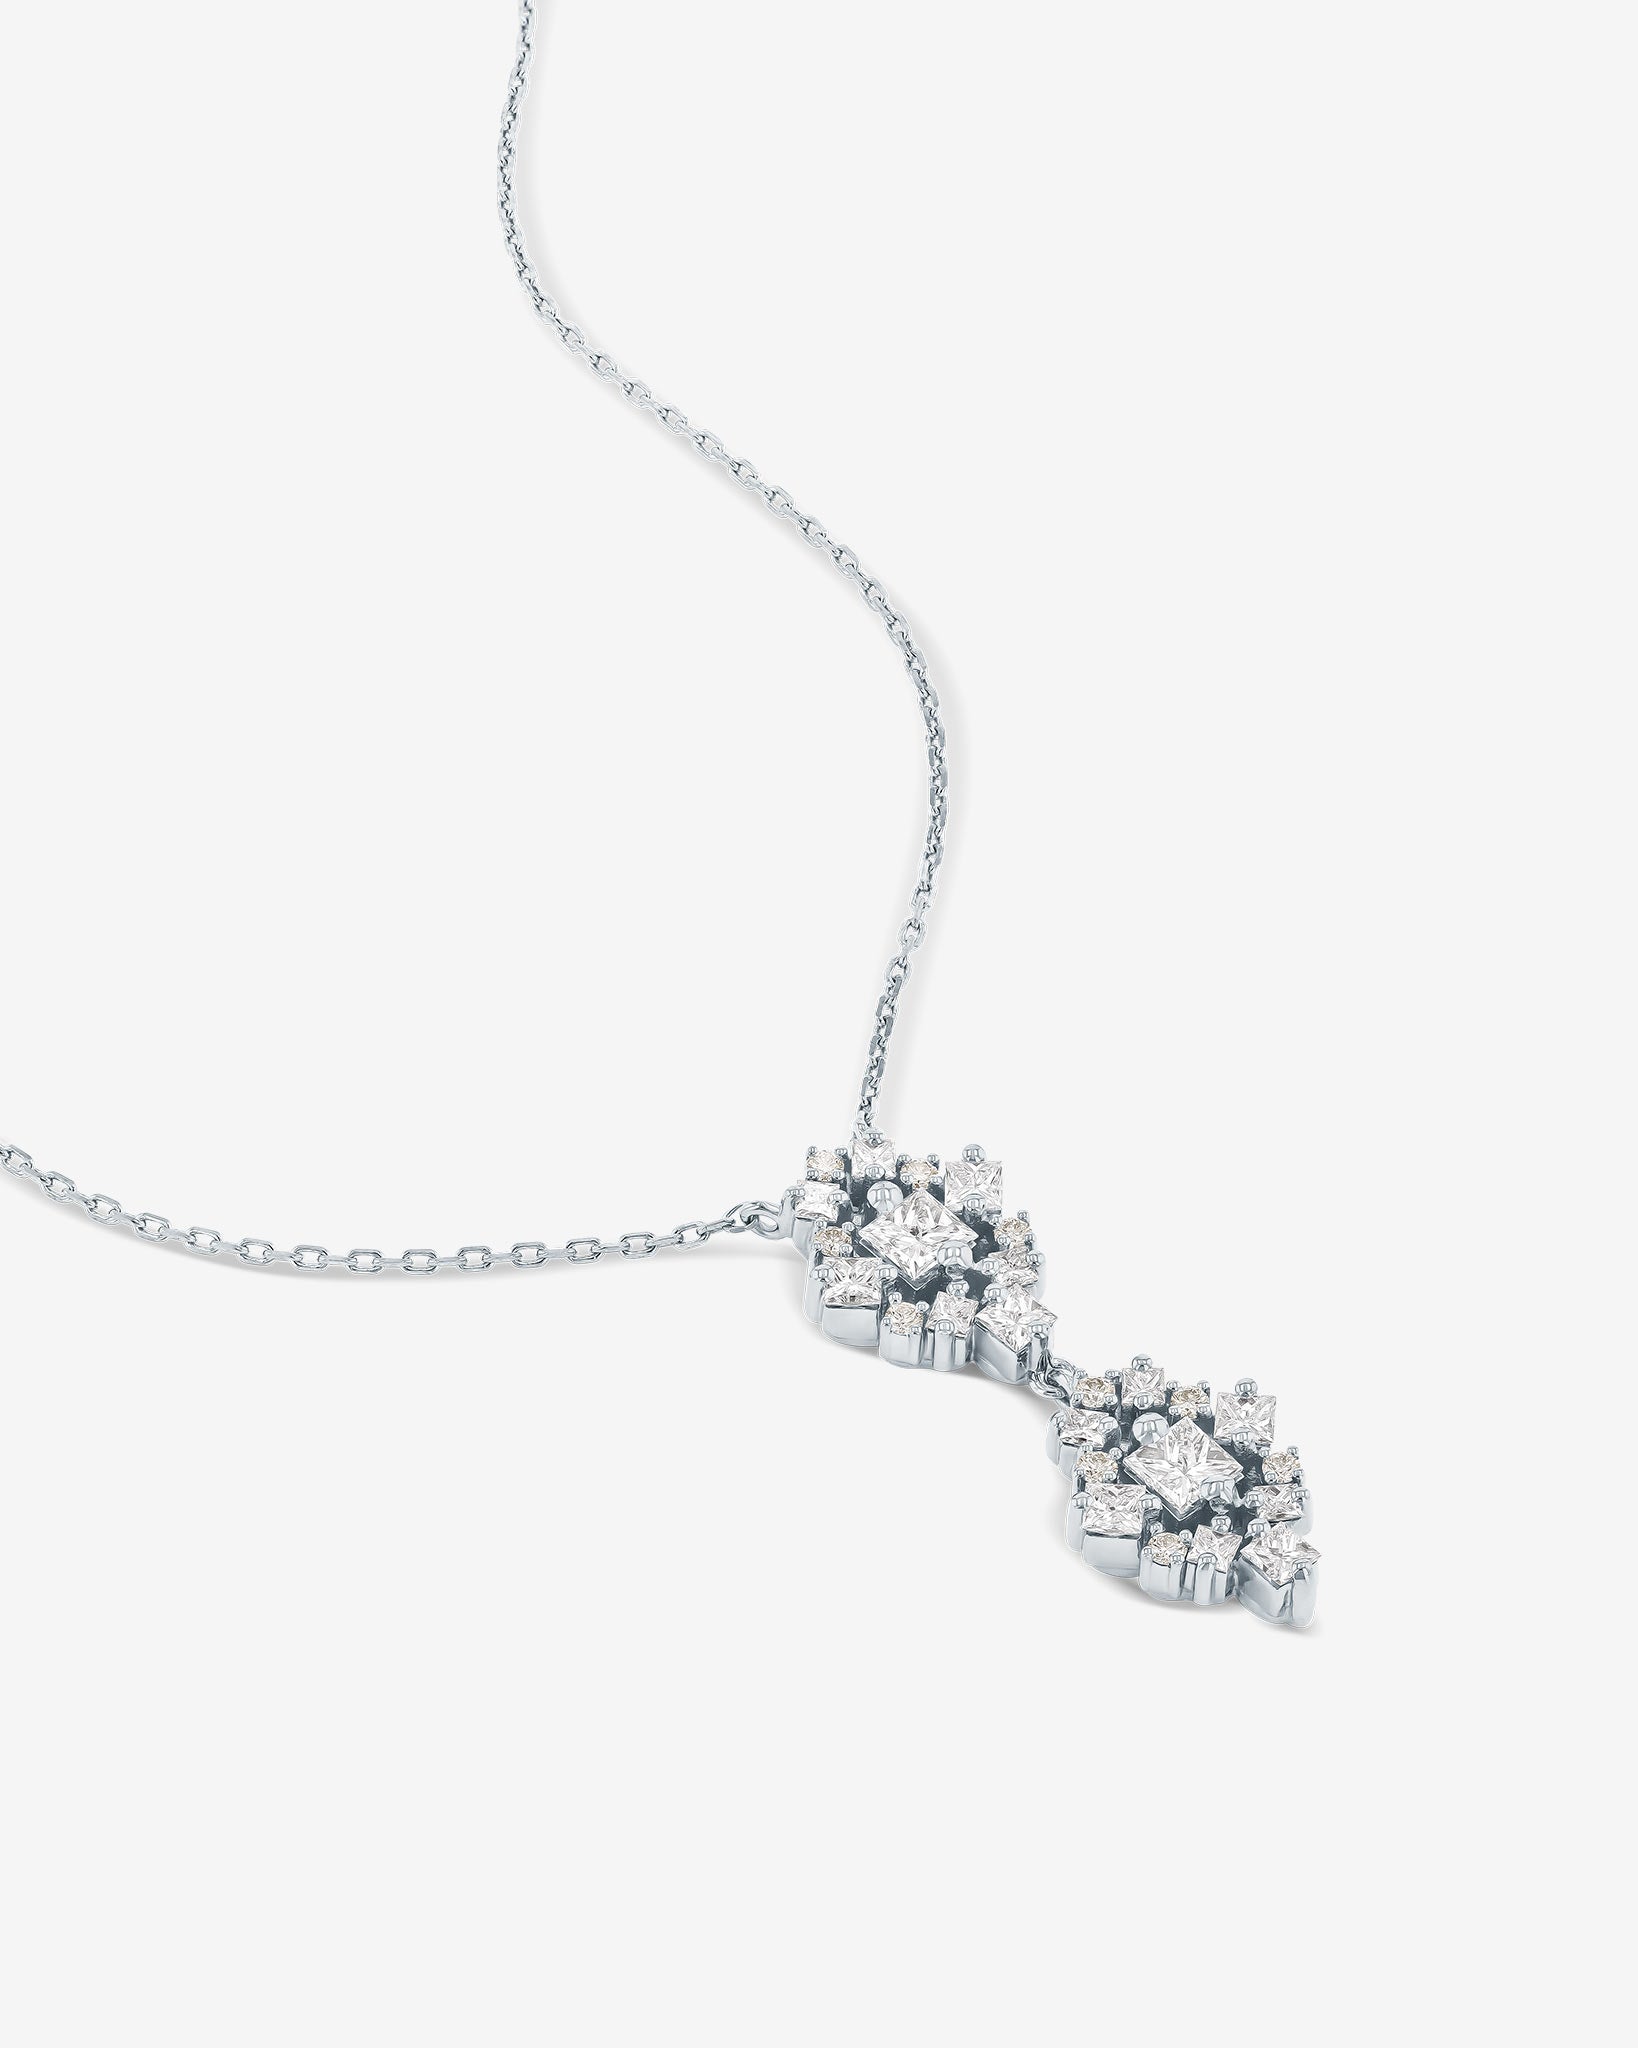 Suzanne Kalan La Fantaisie Double Star Diamond Pendant in 18k white gold